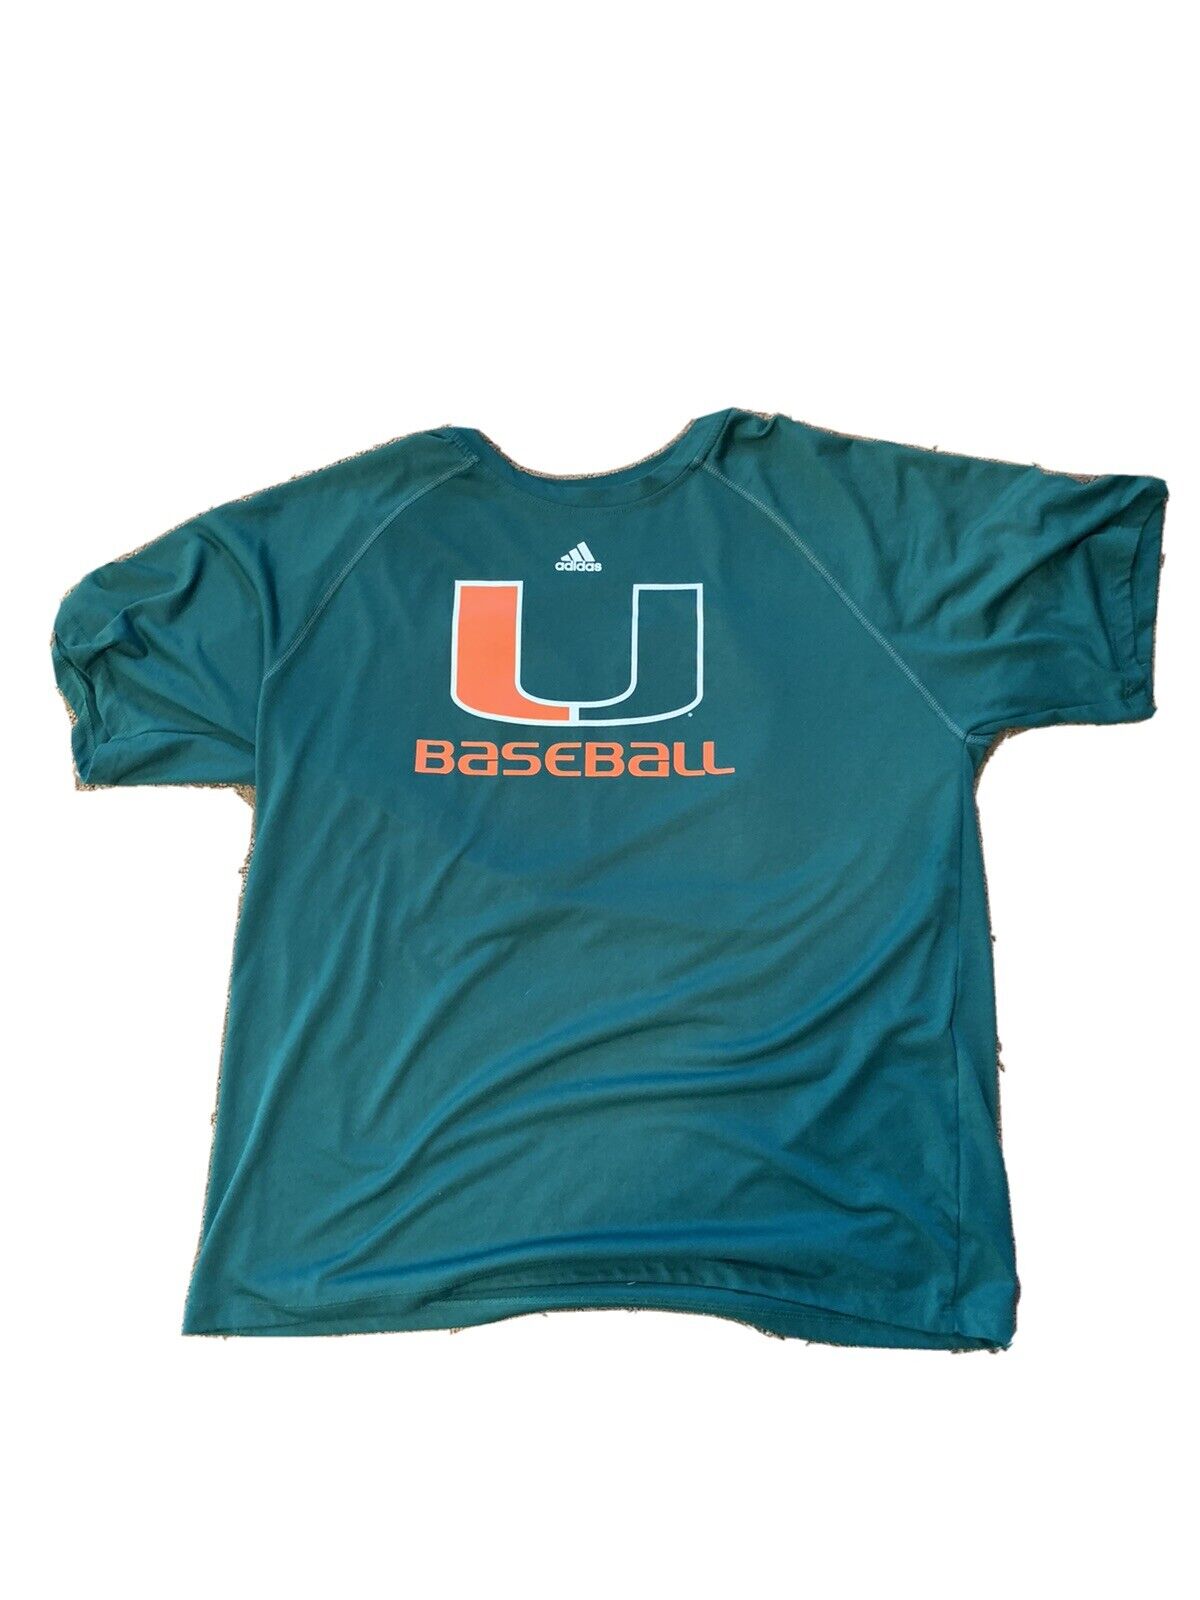 Miami Hurricanes Adidas Baseball Jersey Shirt Team Issued Game